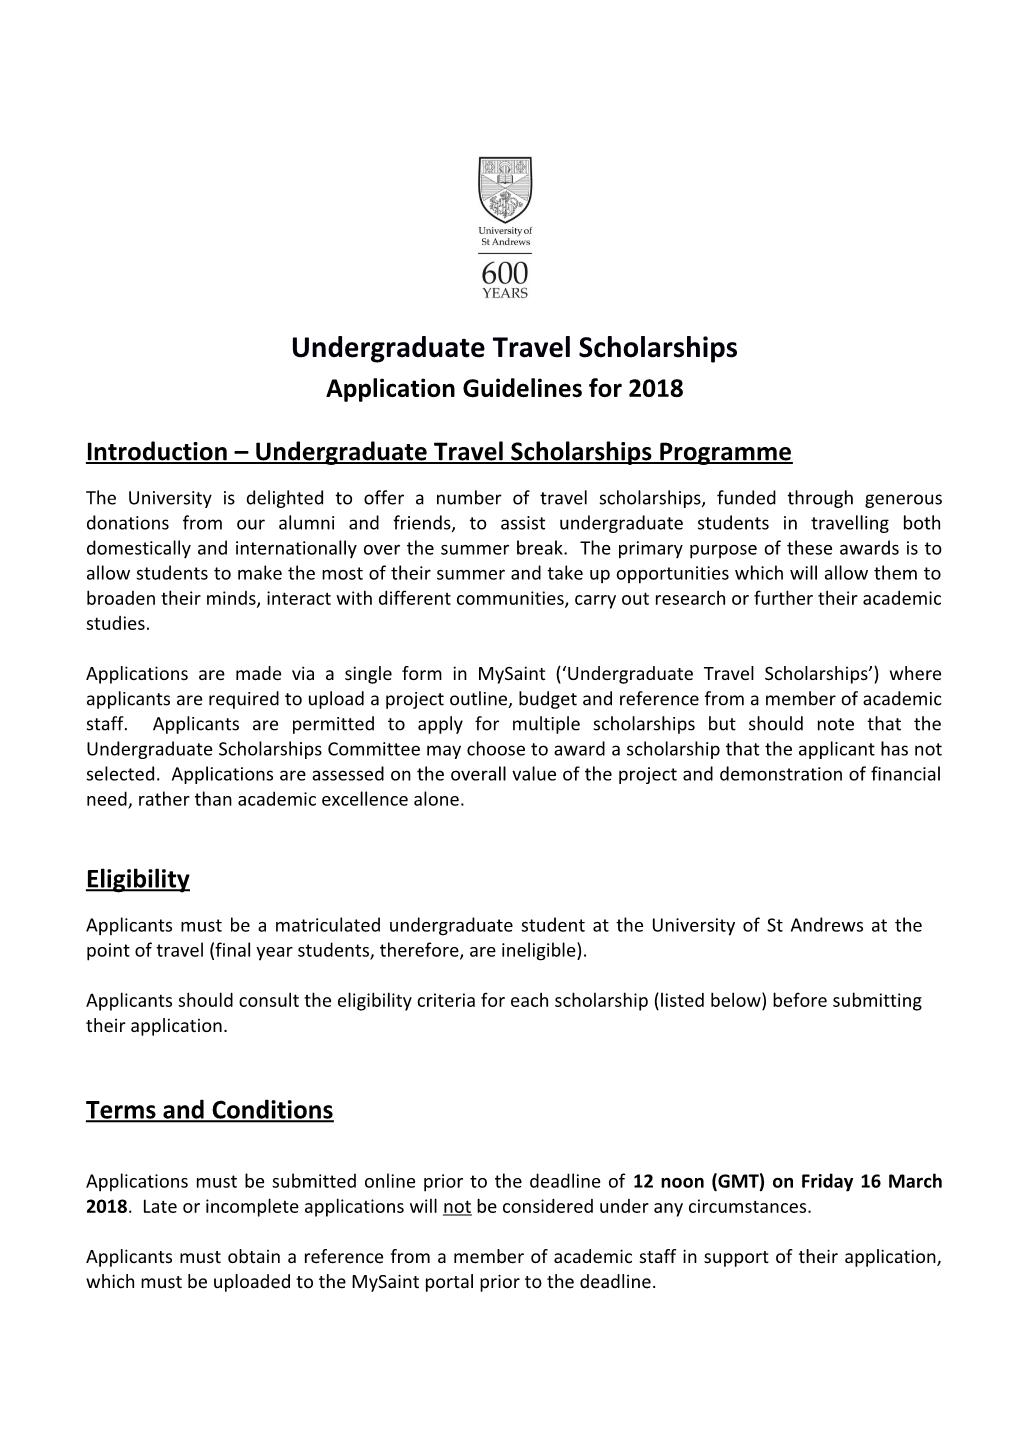 Introduction Undergraduate Travel Scholarships Programme